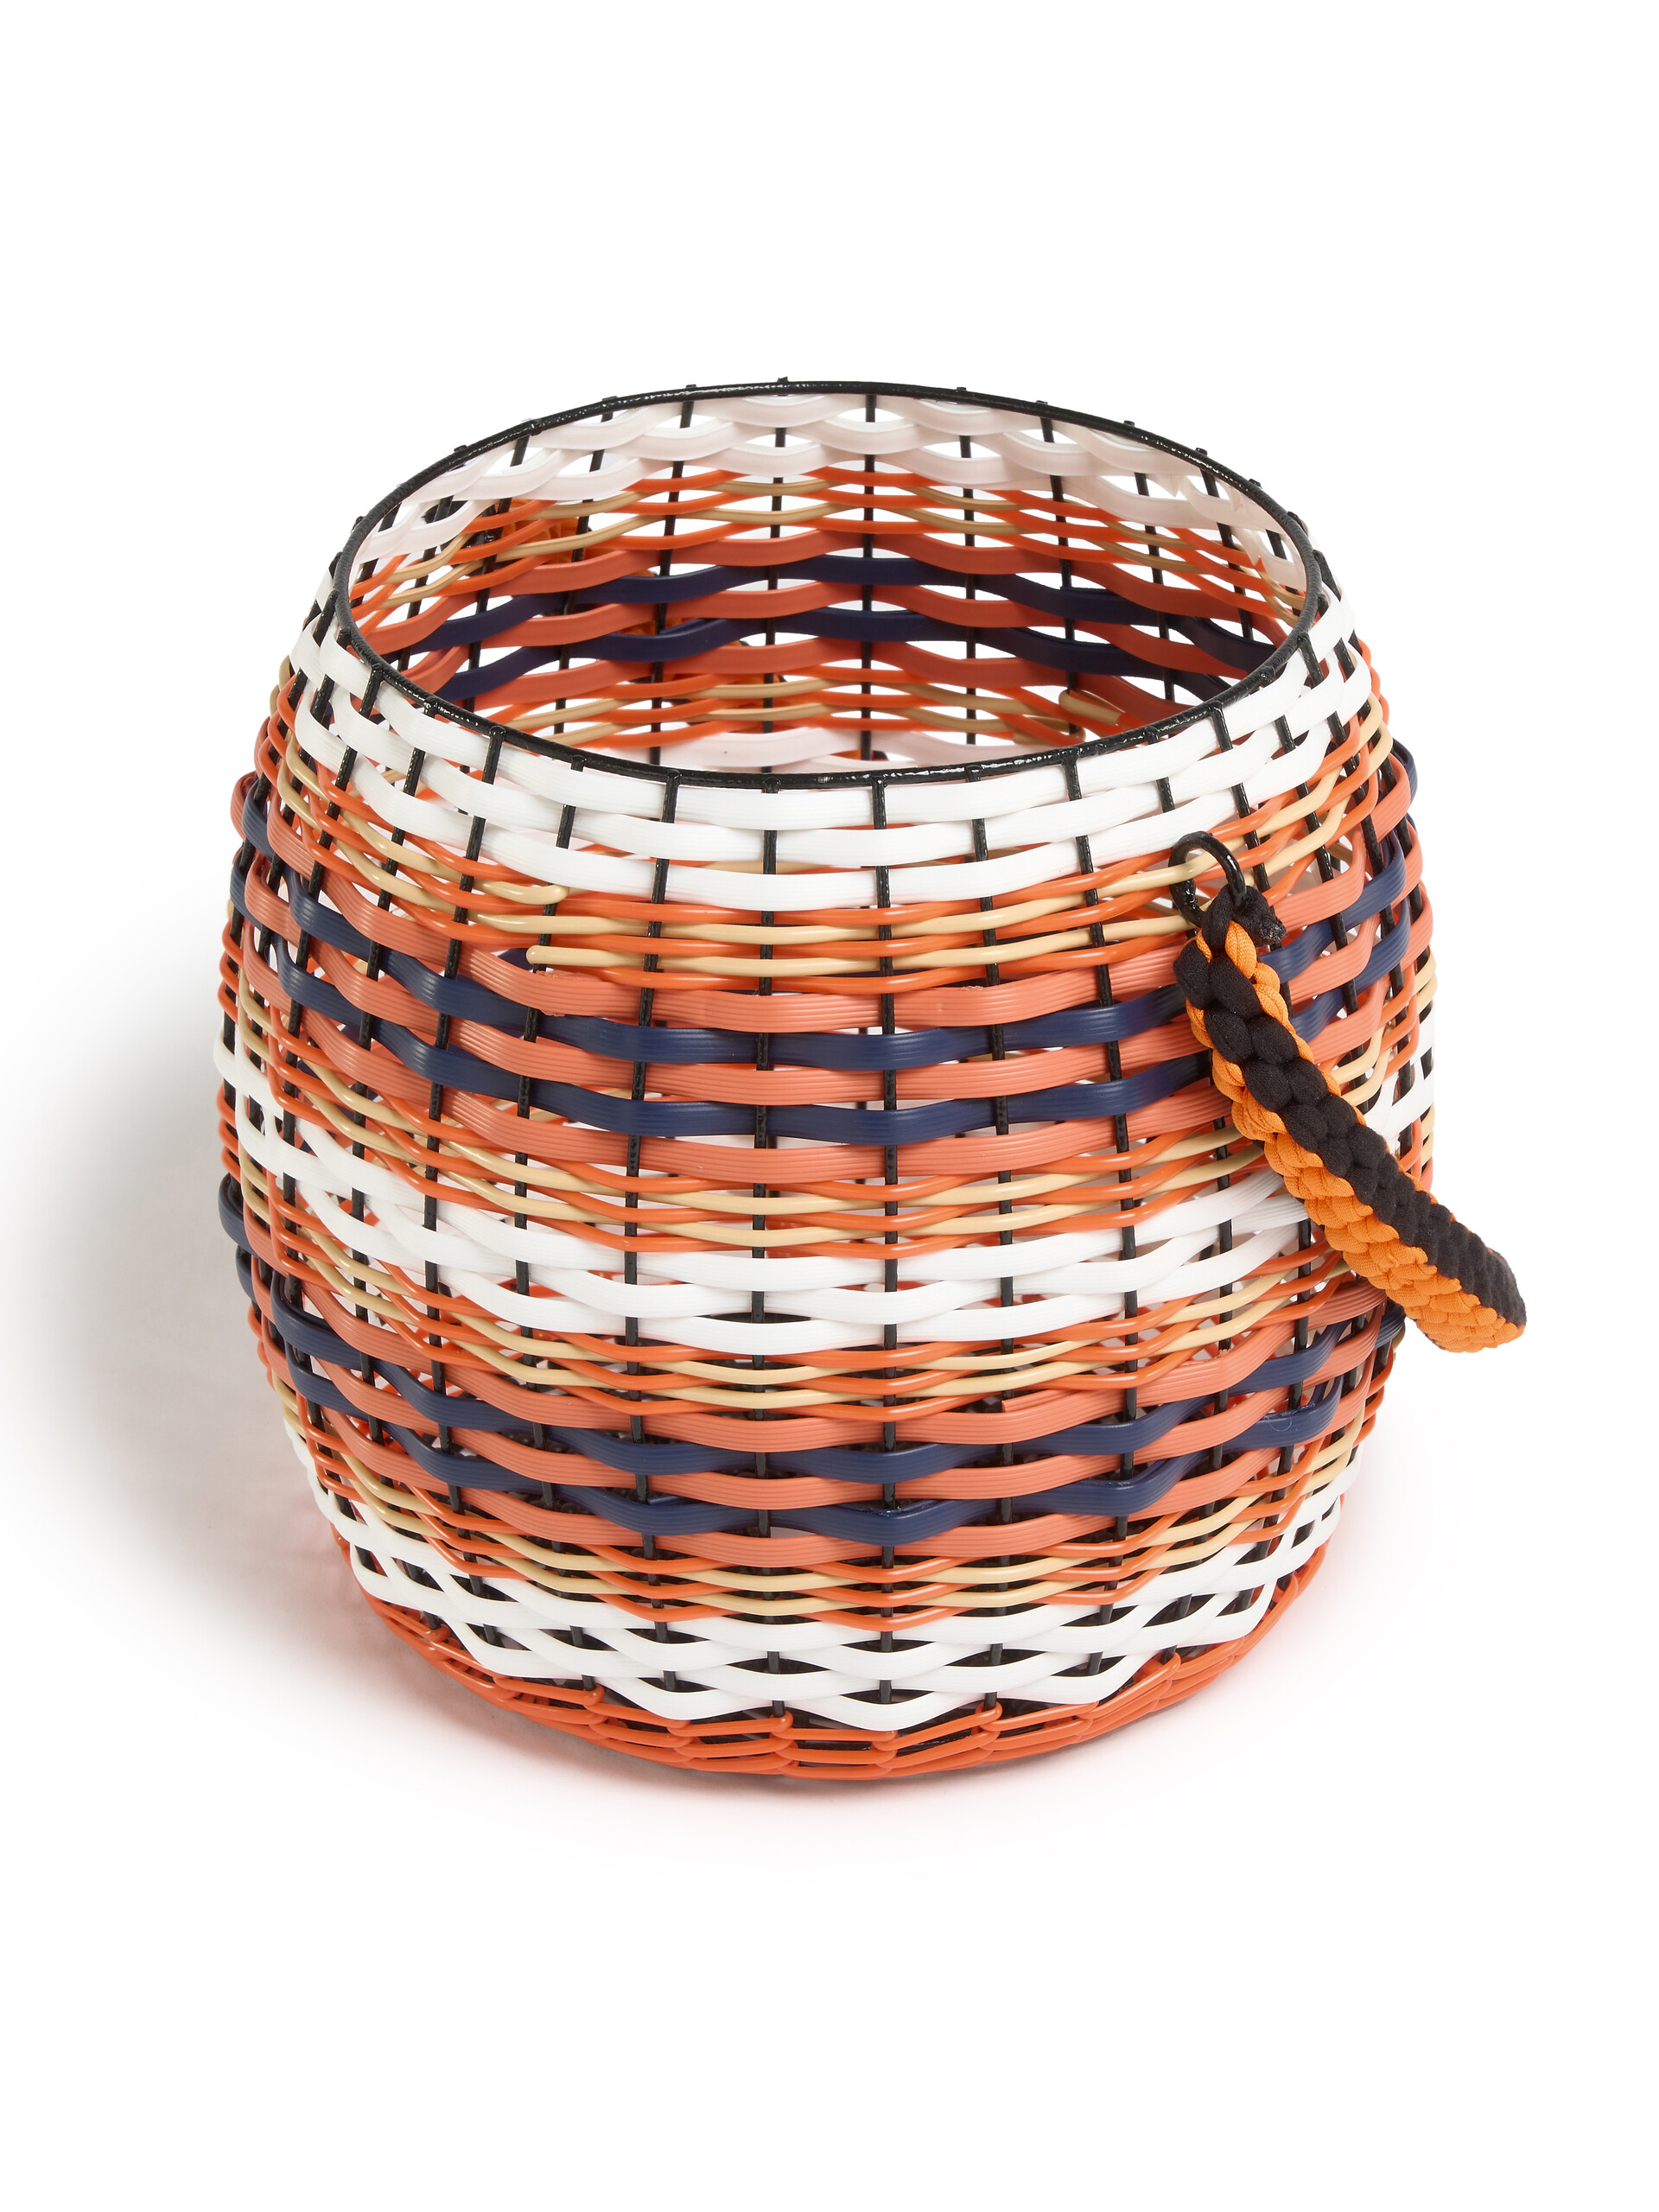 Orange and white MARNI MARKET woven cable basket - Accessories - Image 3